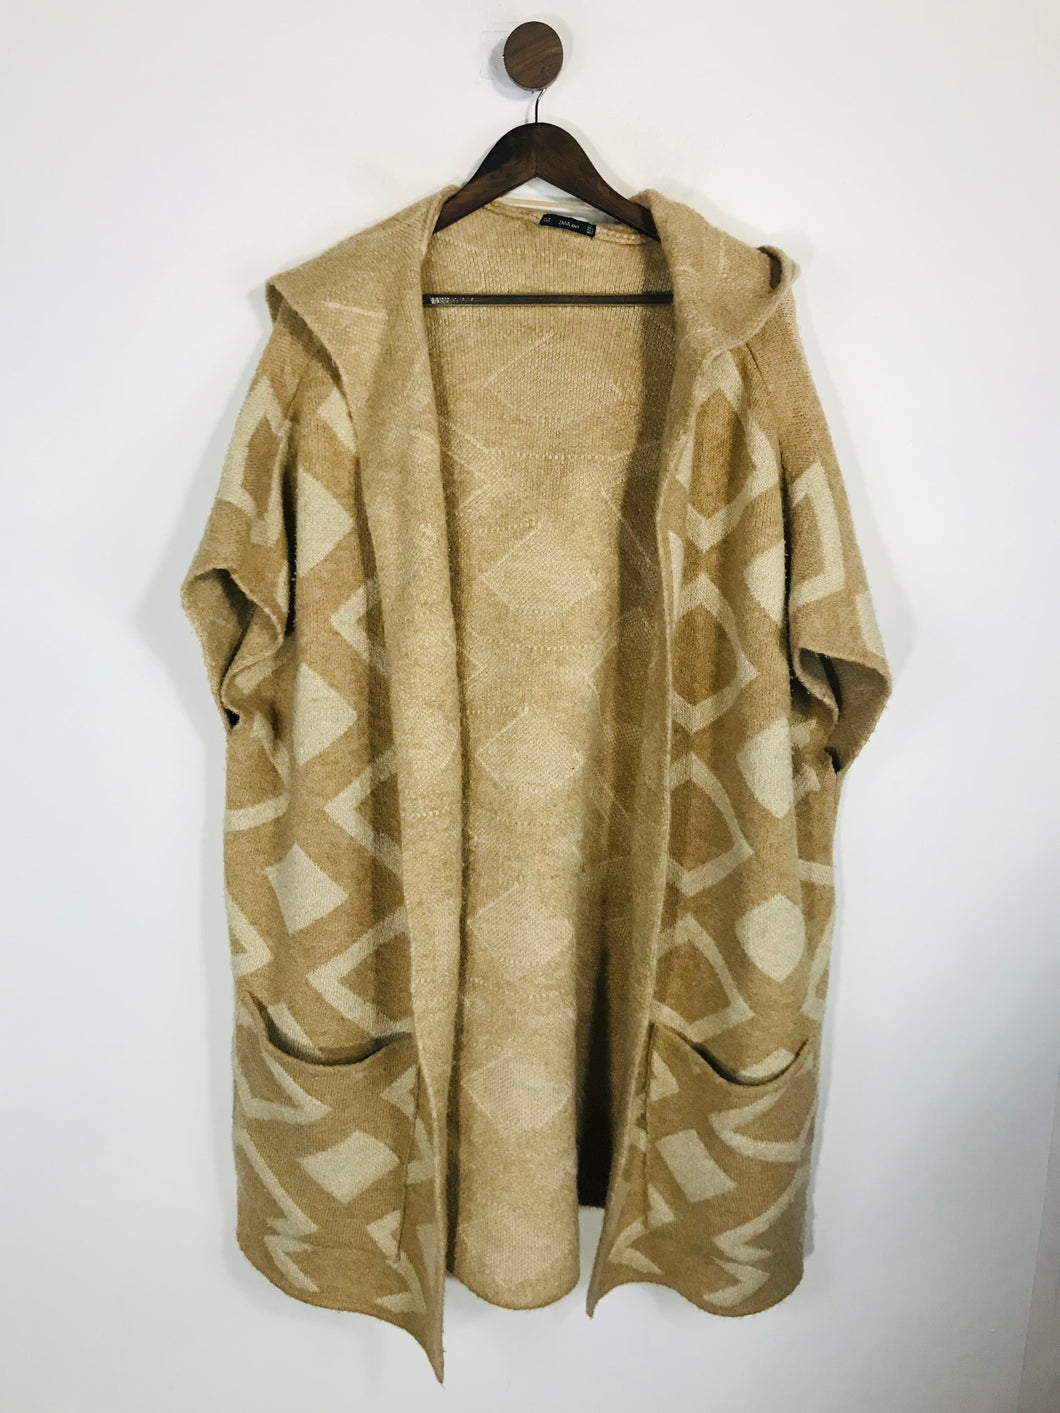 Zara Women's Knit Hooded Short Sleeve Overcoat Coat | M UK10-12 | Beige